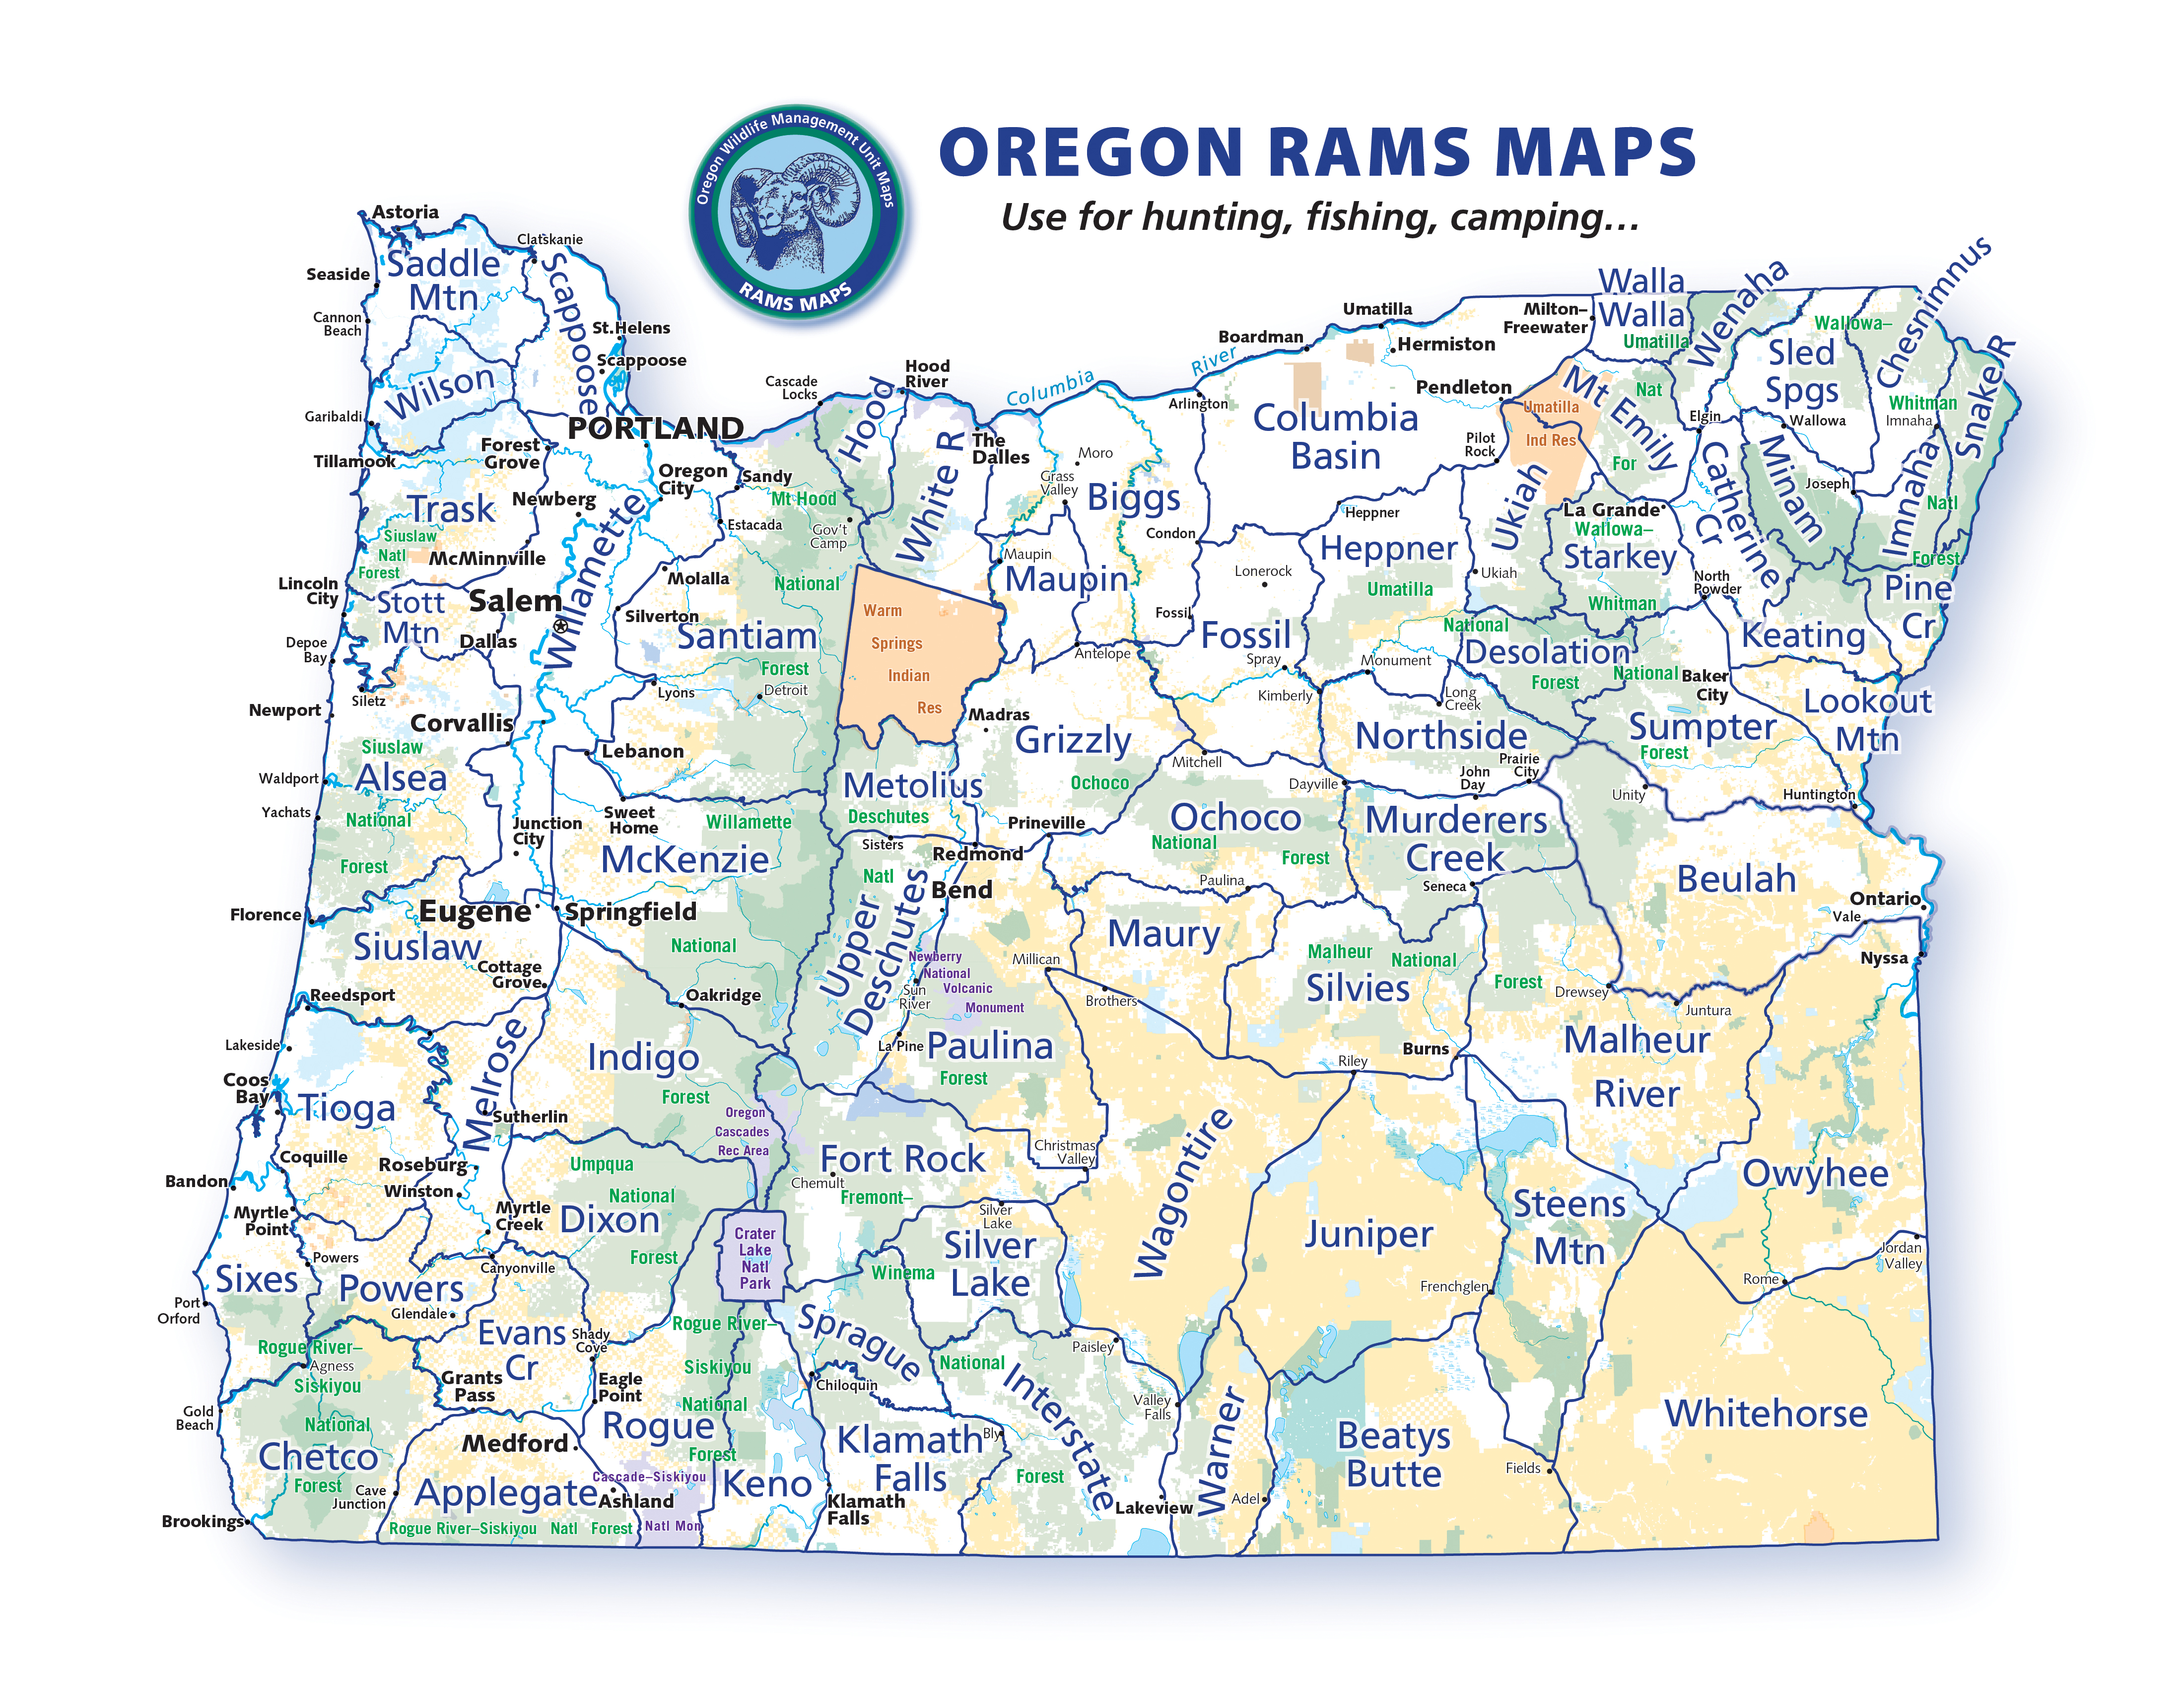 oregon hunting unit map Oregon Rams Maps oregon hunting unit map